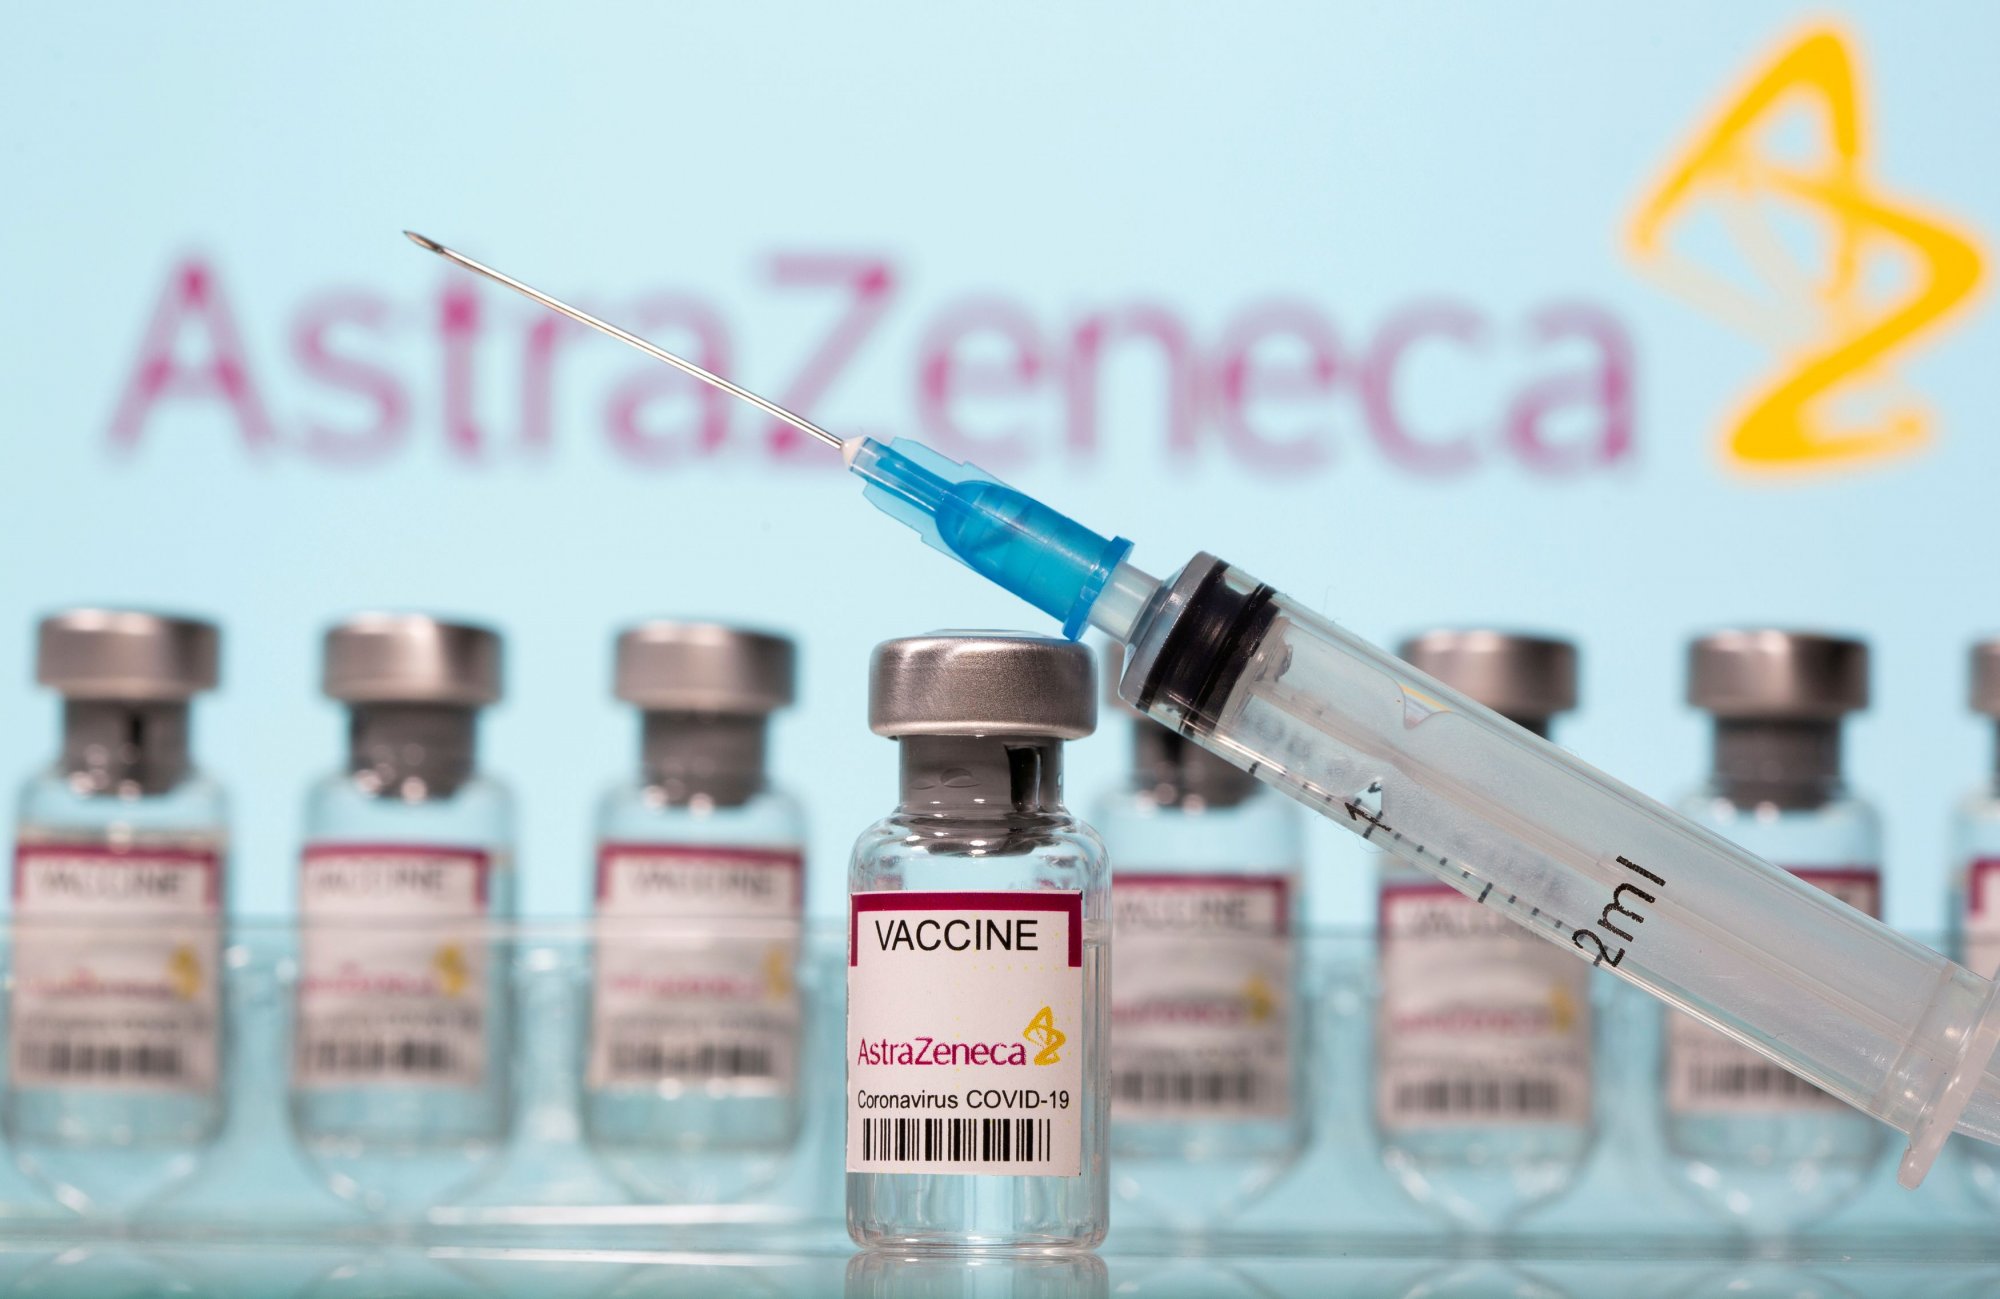 AstraZeneca: Τι λένε οι ειδικοί για την απόσυρση του εμβολίου καθώς τα ερωτήματα πληθαίνουν